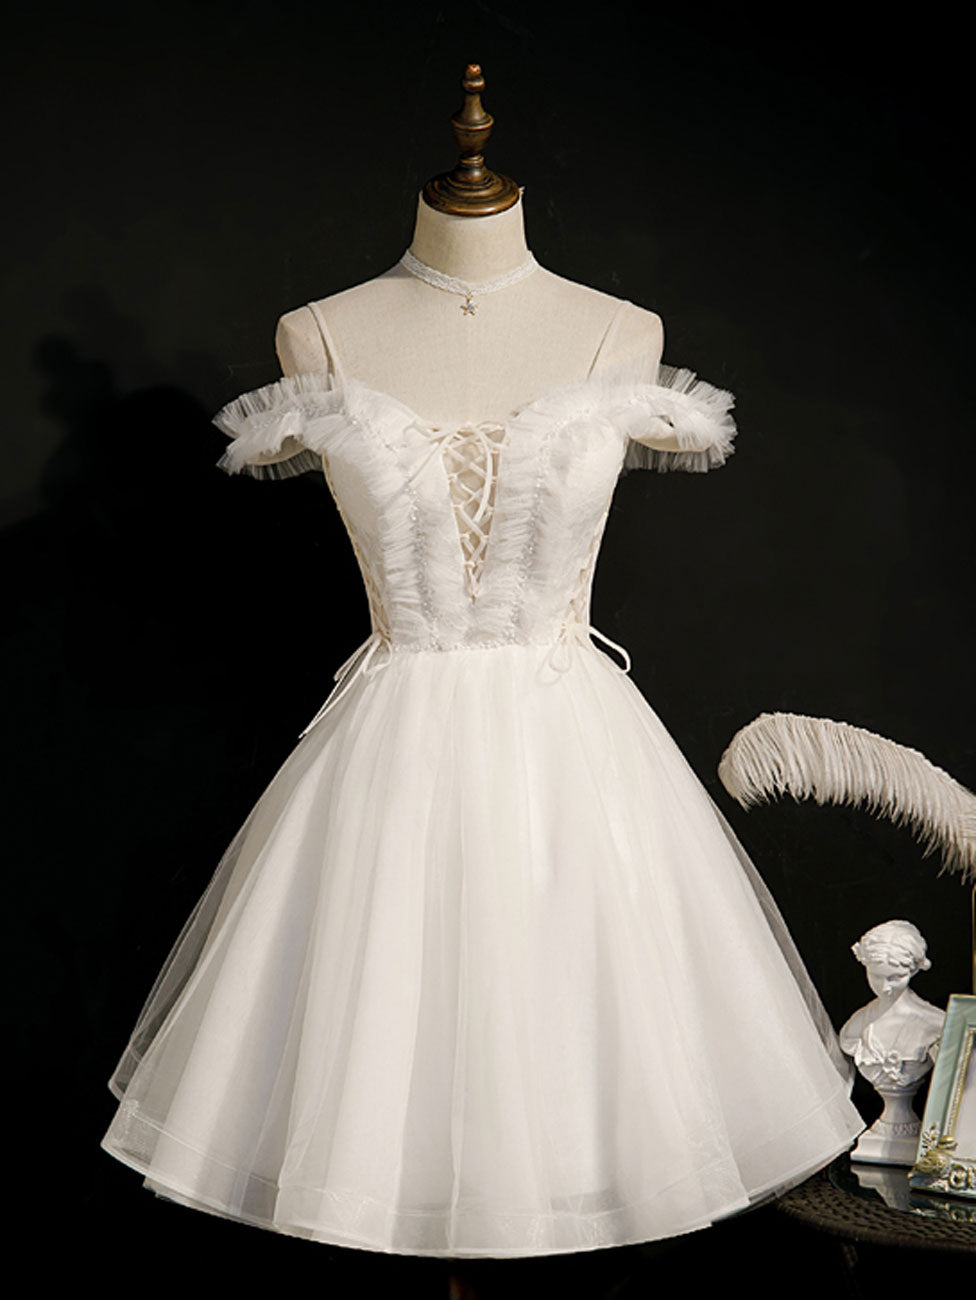 Bridesmaid Dresses Summer Wedding, White Short Prom Dresses, Off Shoulder White Puffy Homecoming Dresses